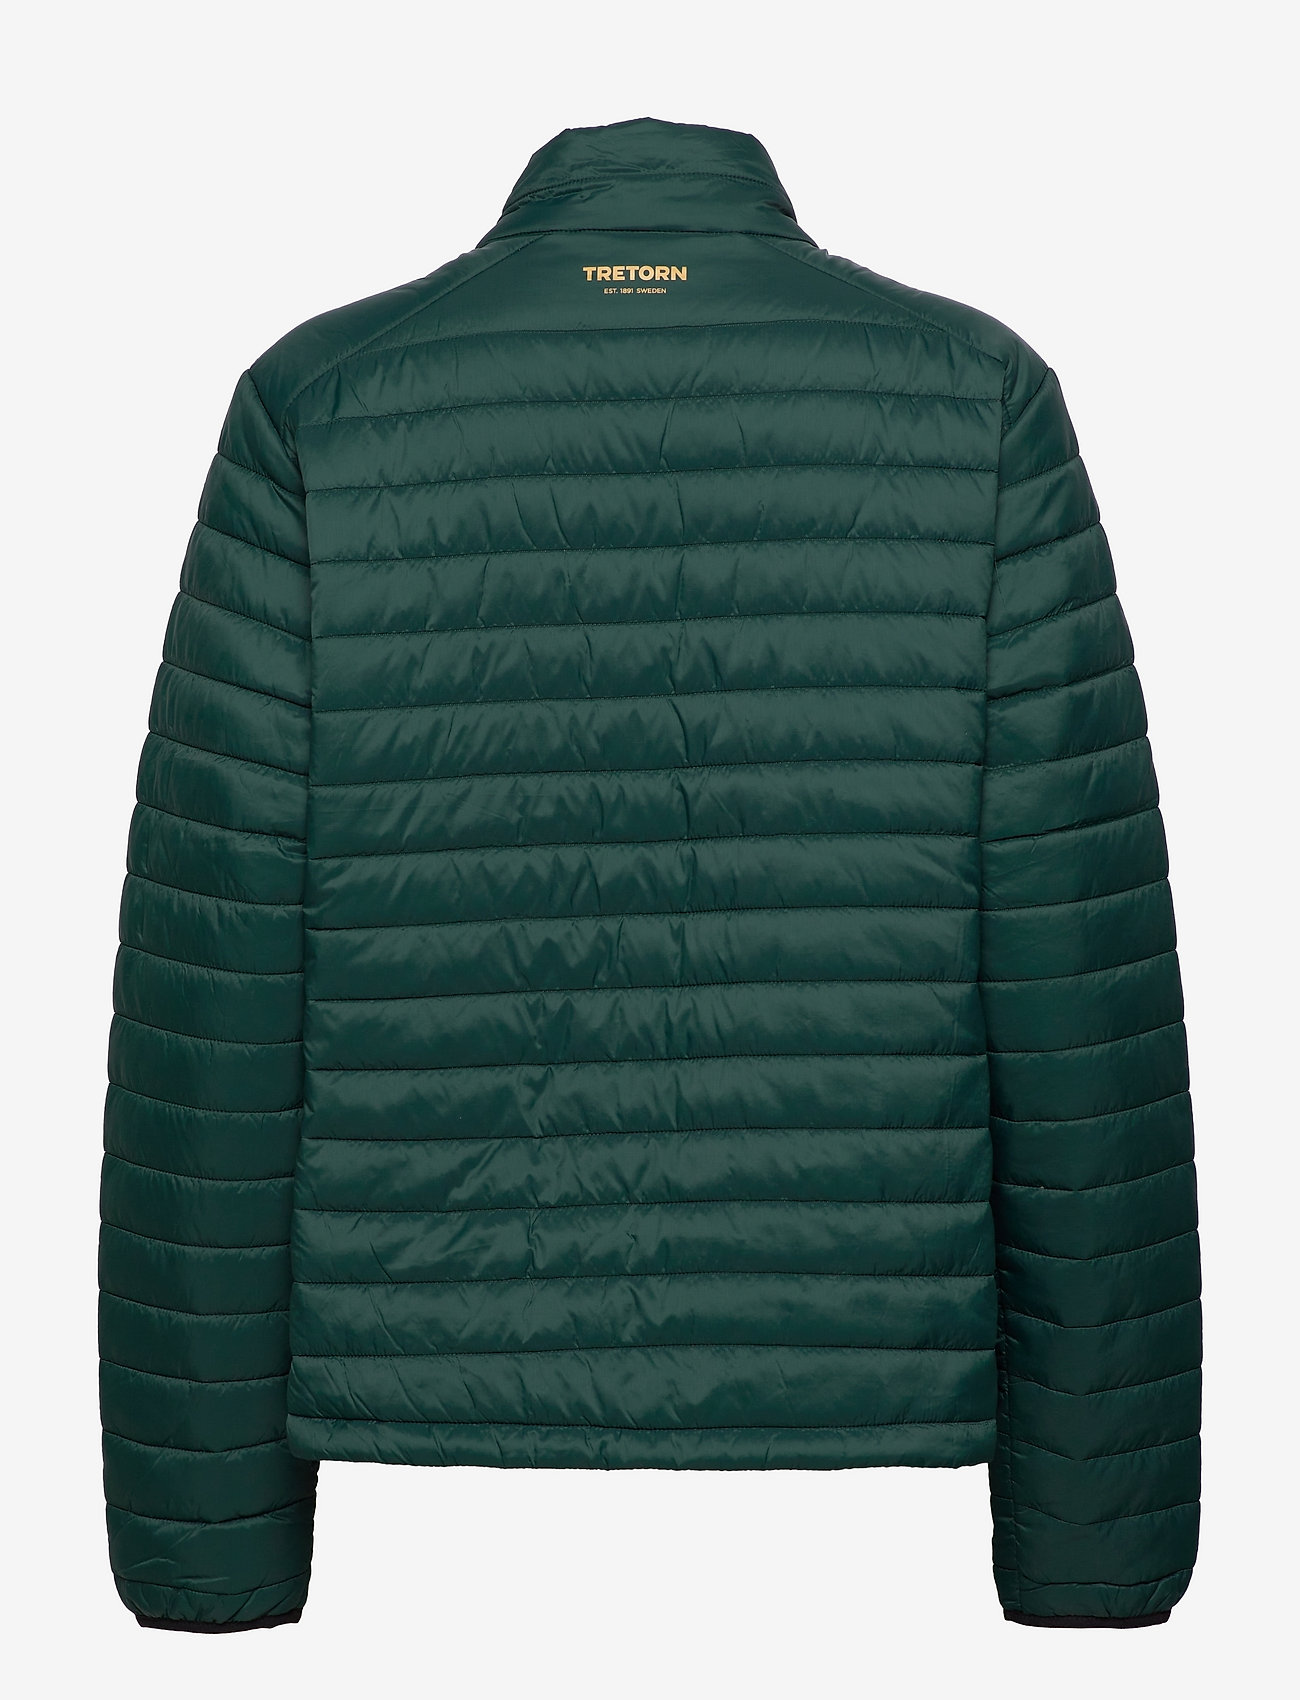 Tretorn - SHELTER LINER W's - winter jacket - 068/frosted gre - 1